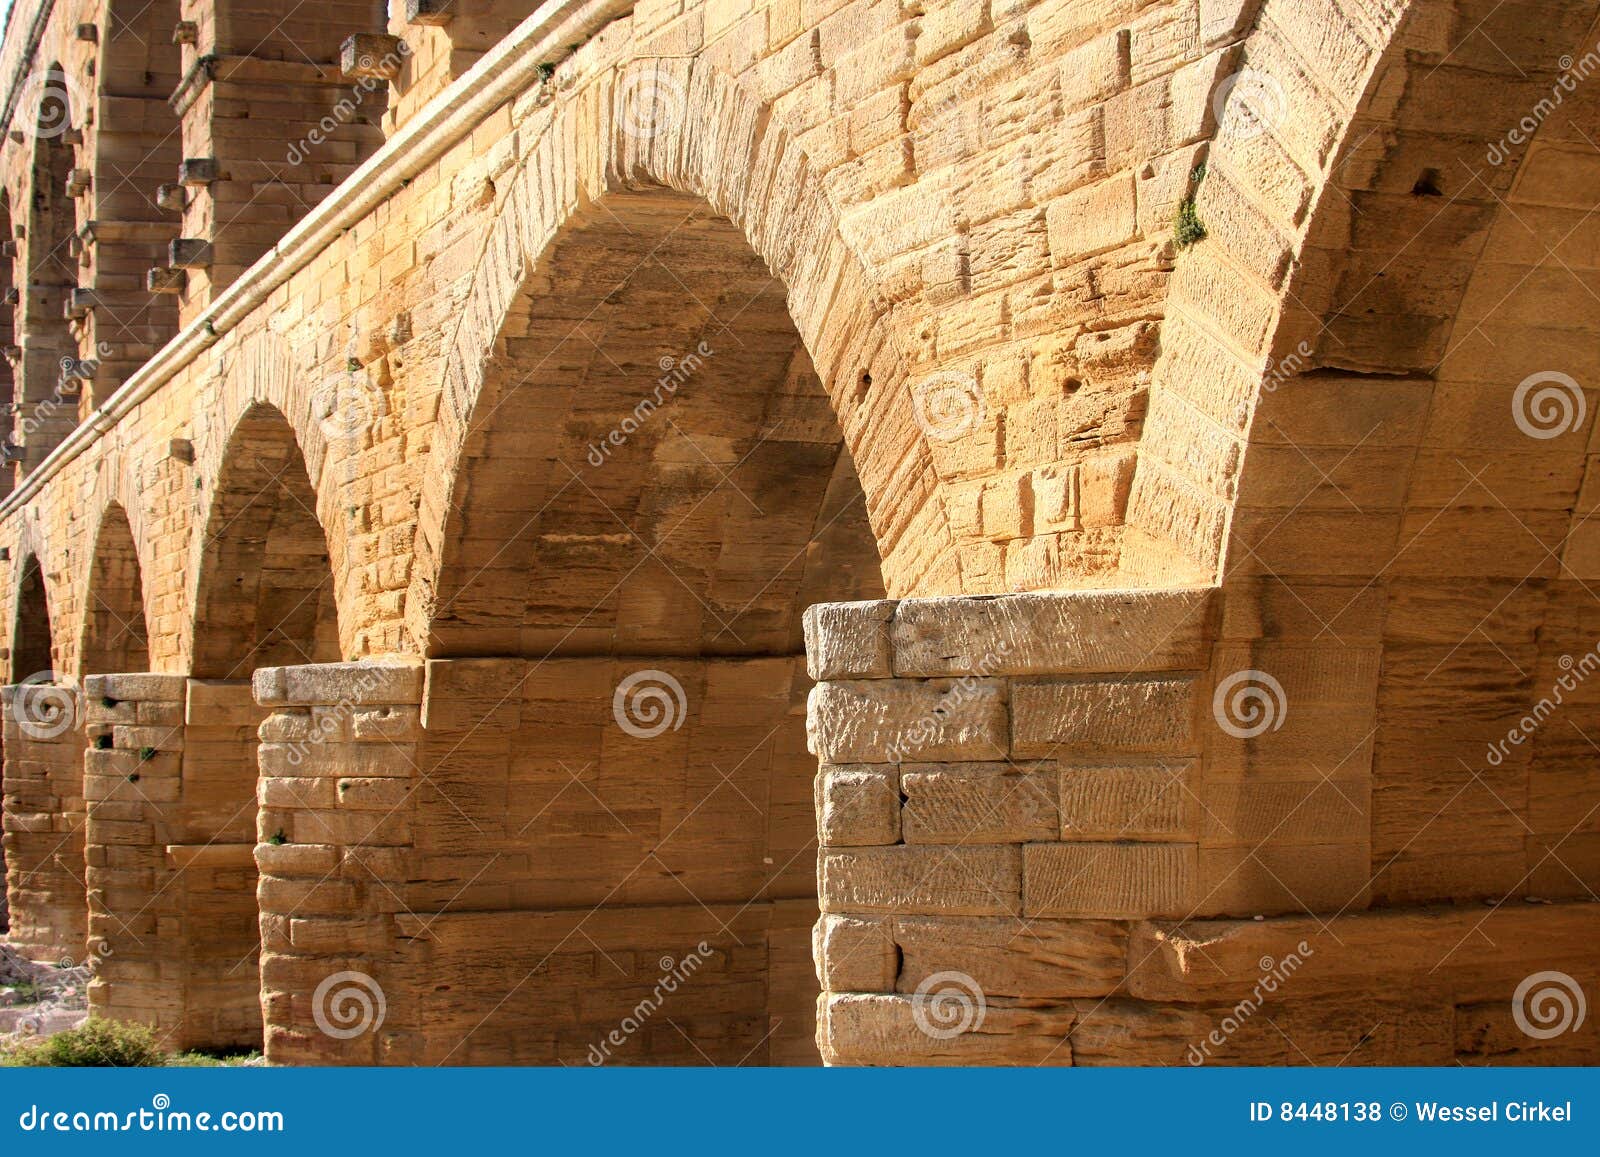 pont du gard, a roman aqueduct, france (close-up)